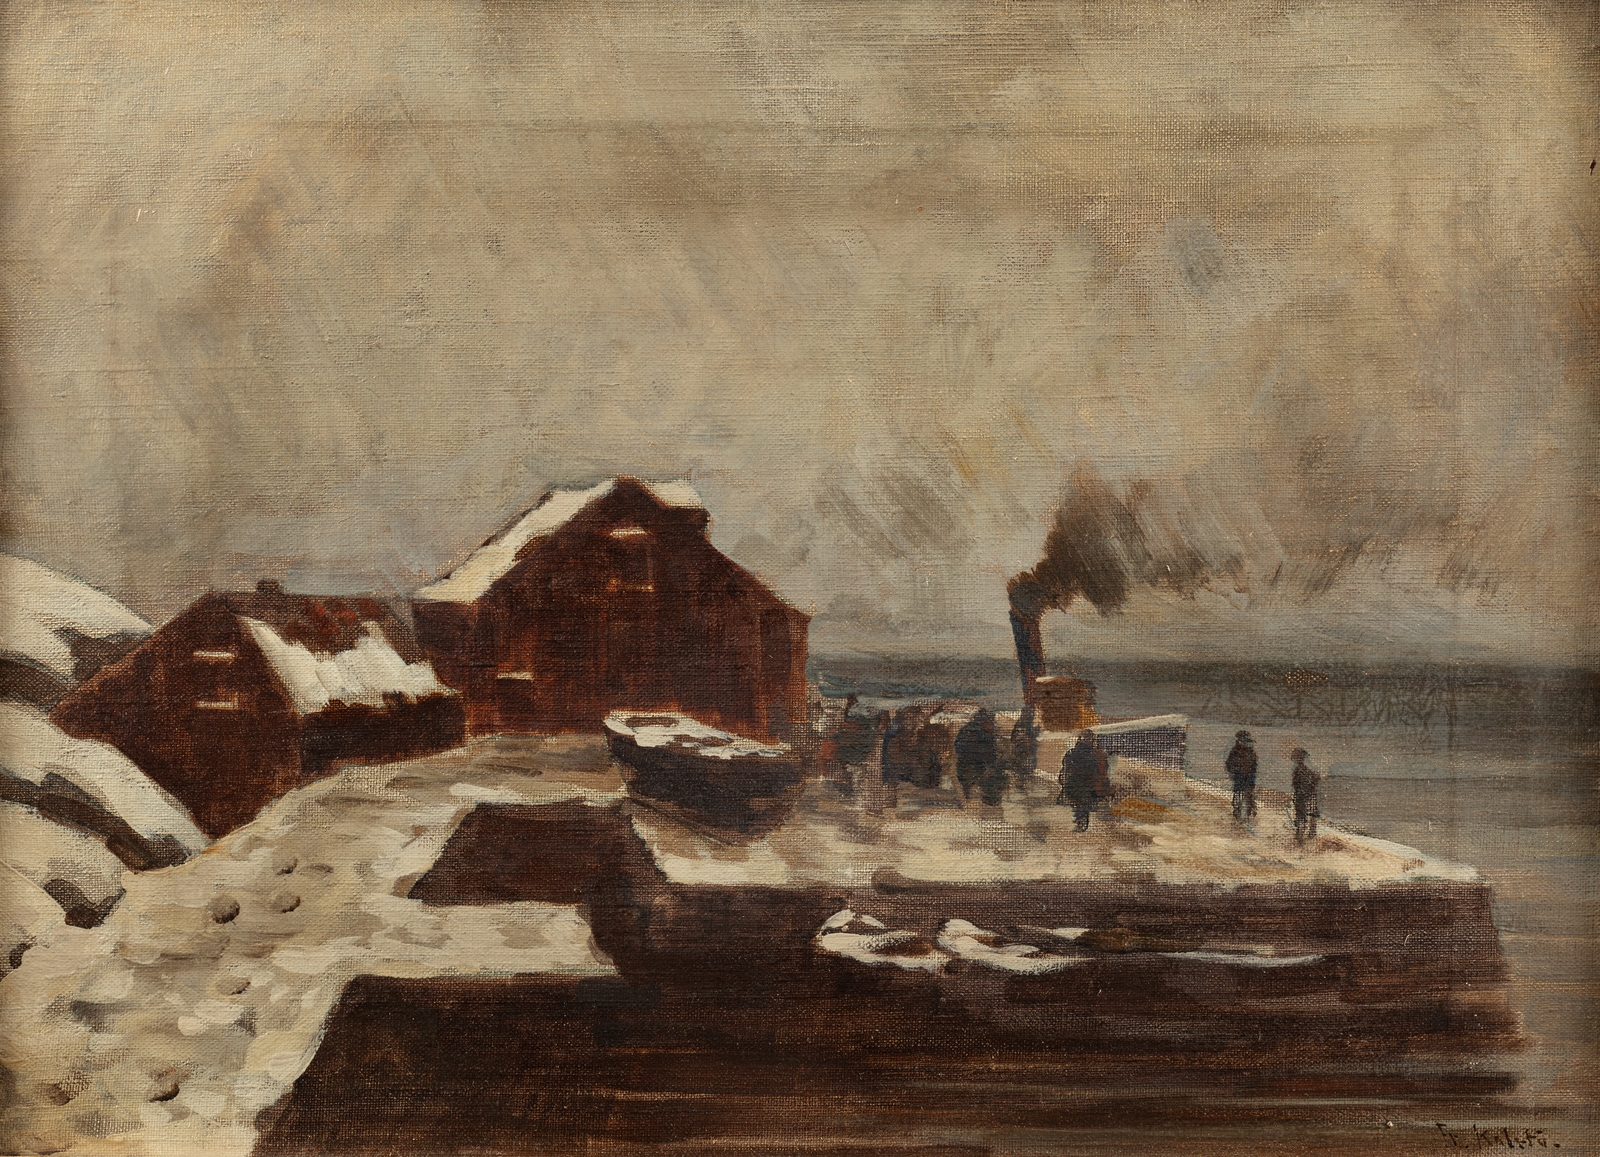 "Ved kaien, vinter" by Fredrik Kolstø